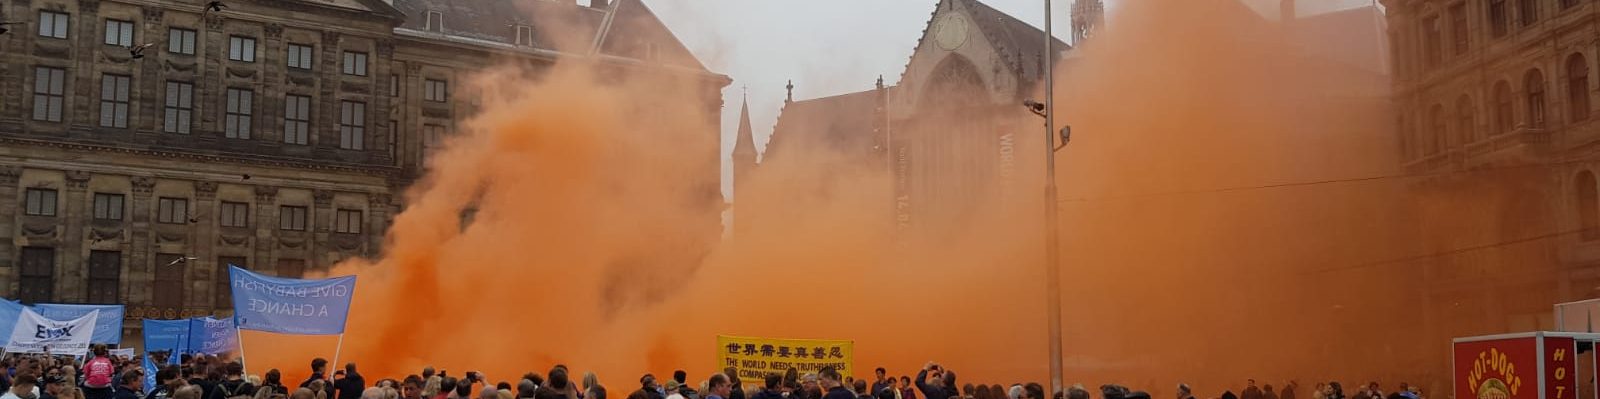 EMK-protest in Amsterdam (Foto's Johan - Durk)